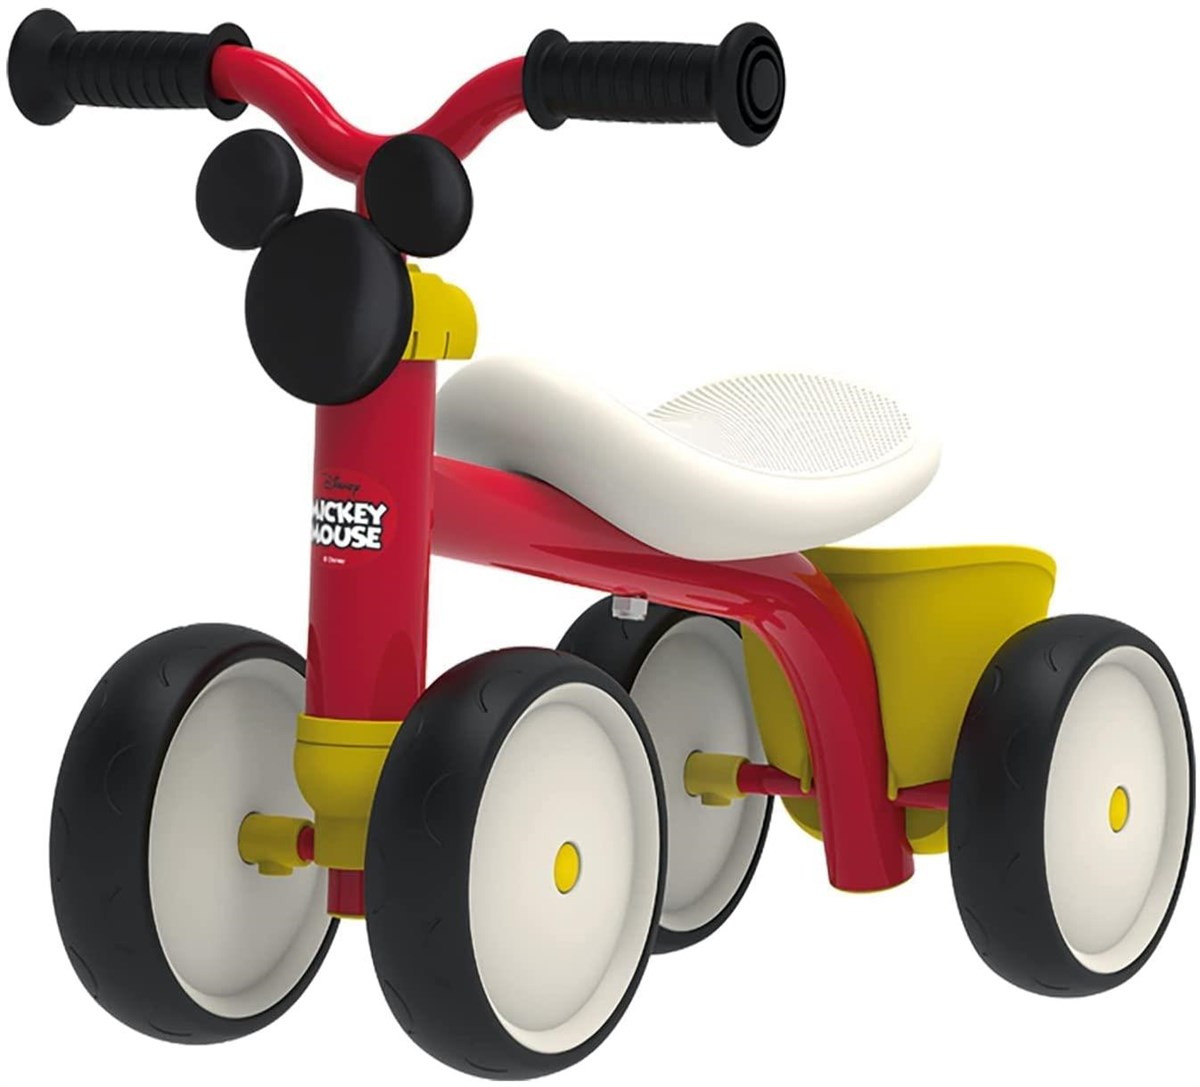 Smoby Mickey Rookie 4 Tekerlekli Bingit Bisiklet 721404 | Toysall